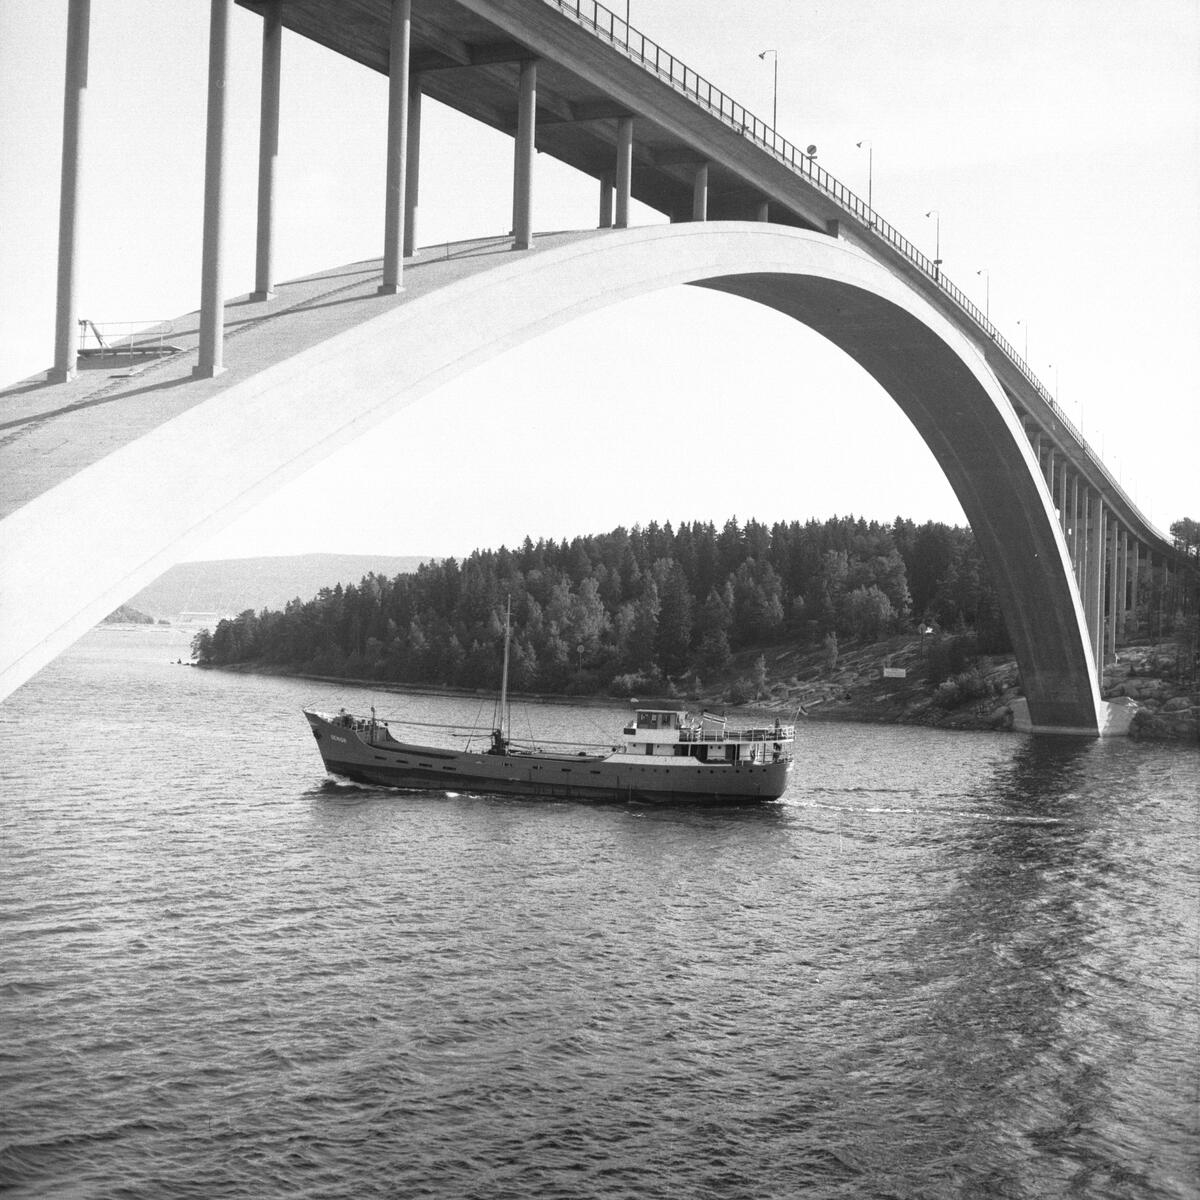 Fartyget Senior vid Sandöbron

